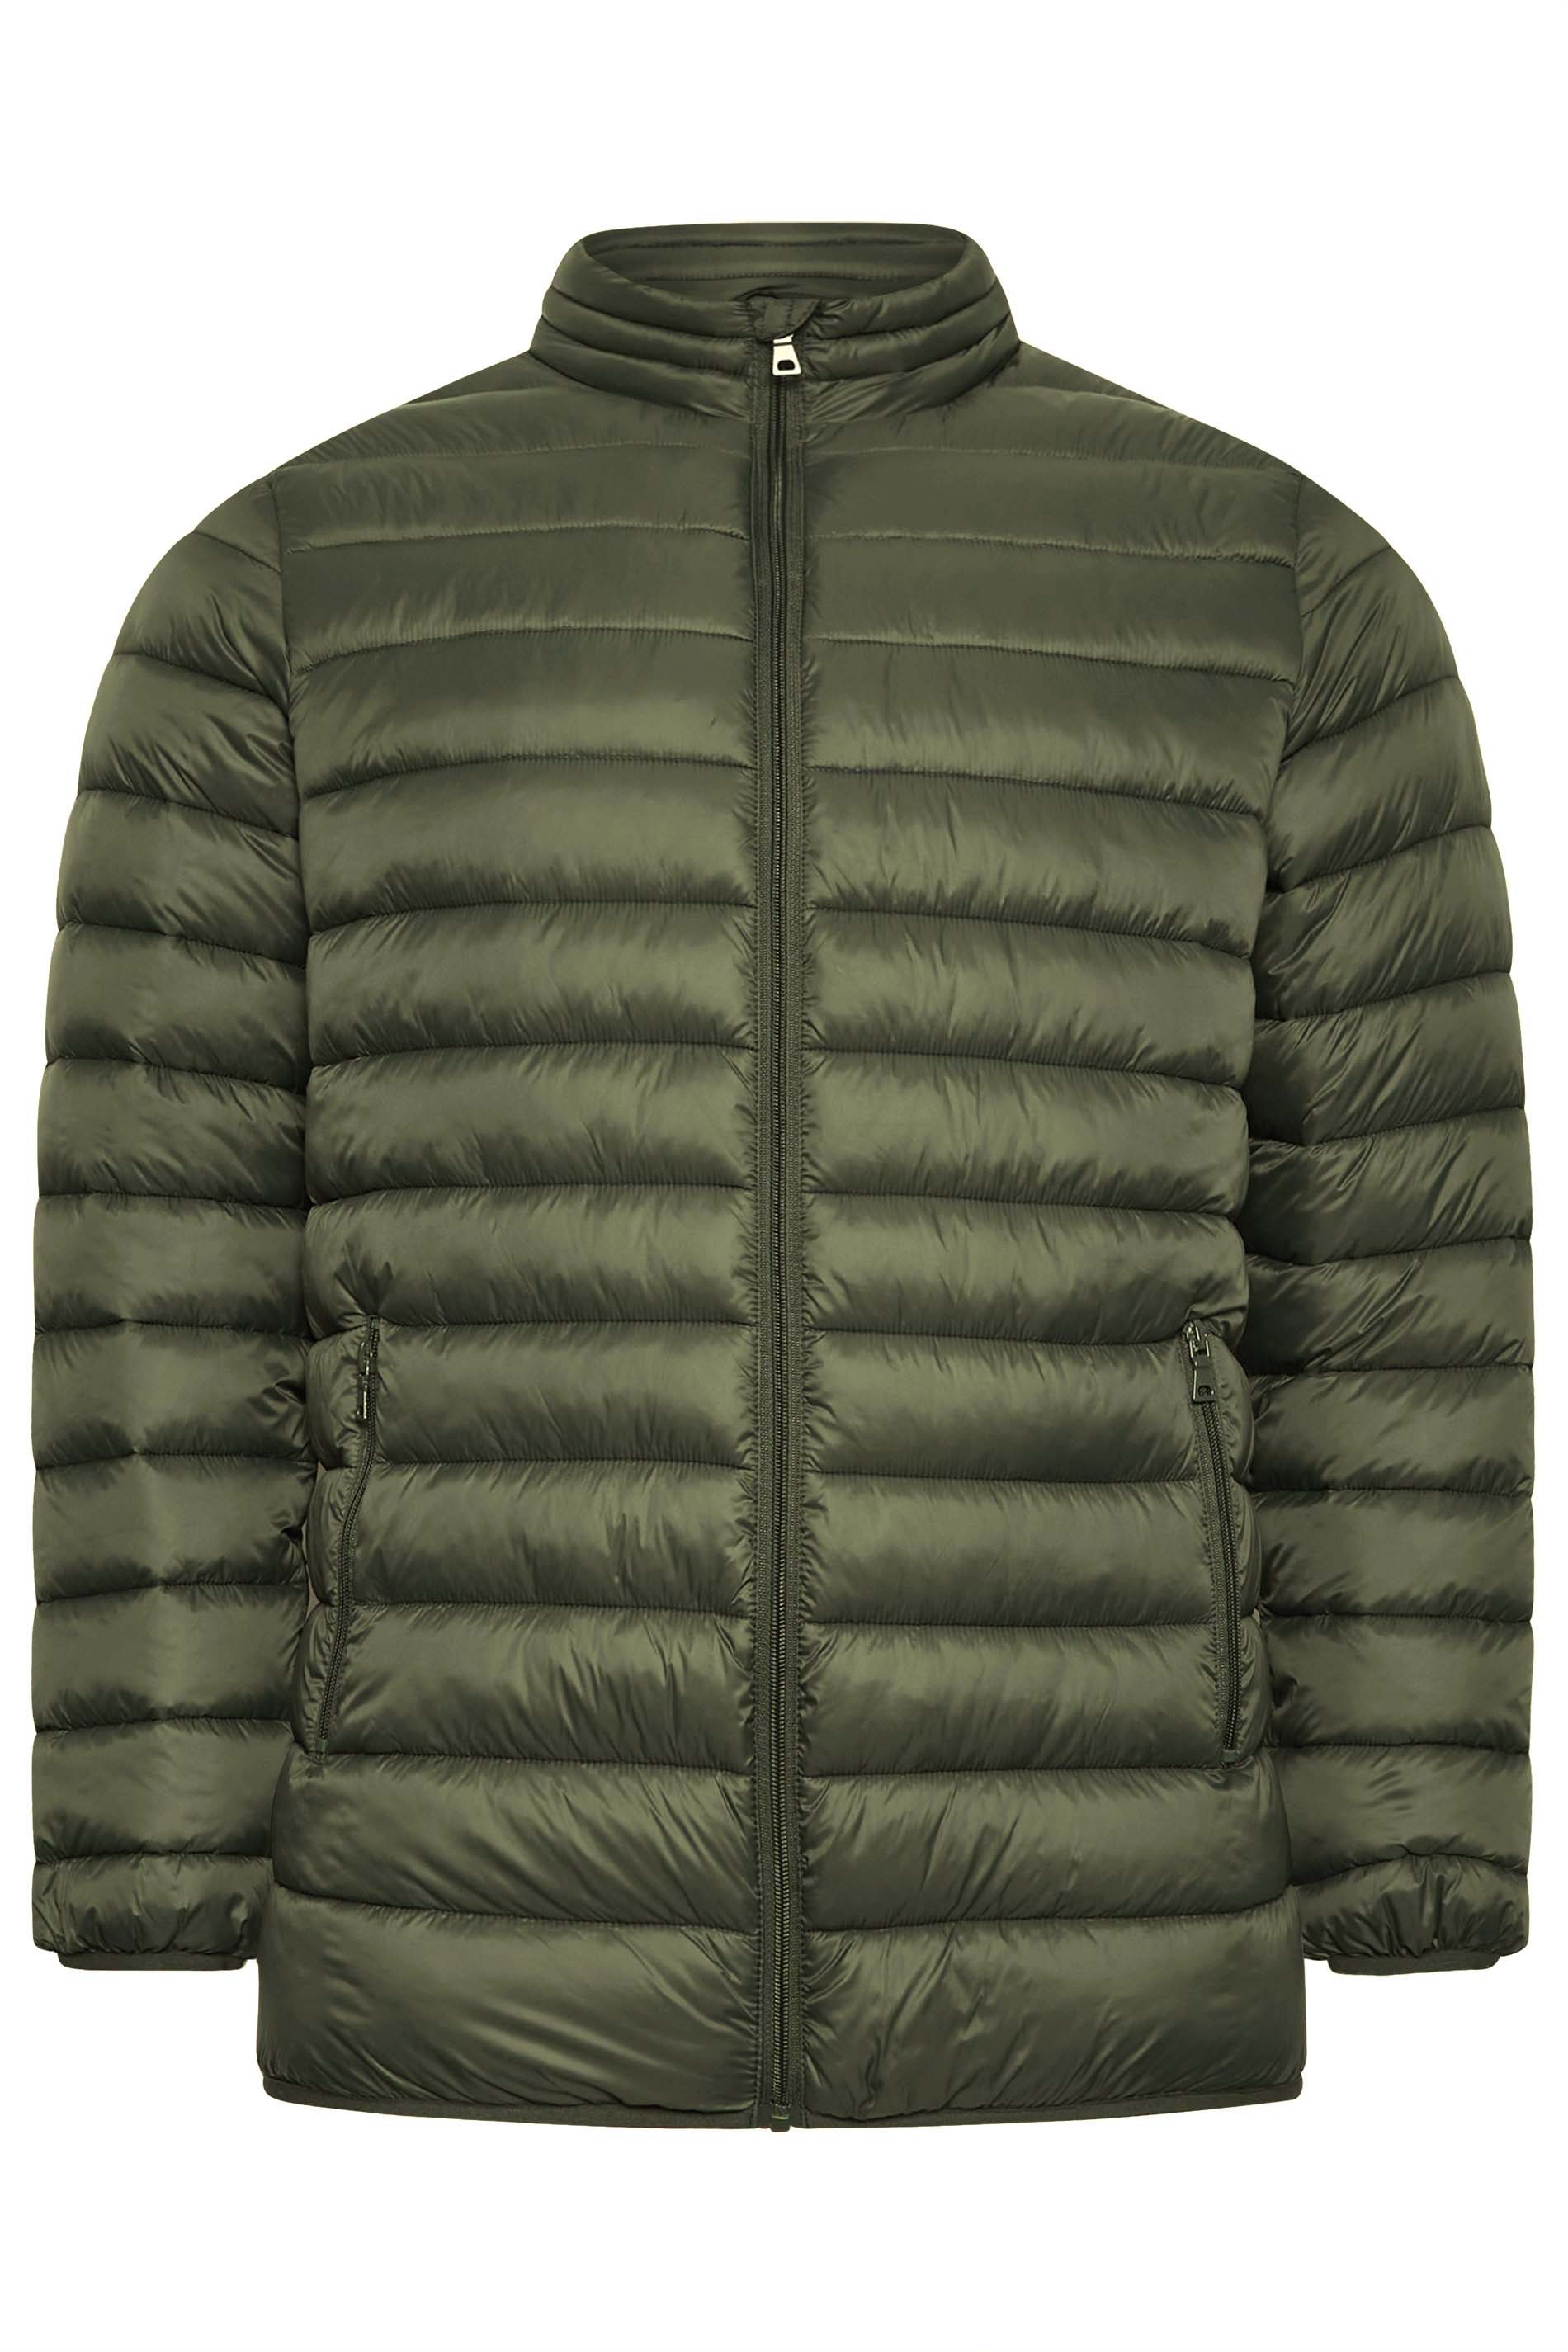 BadRhino Big & Tall Khaki Green Puffer Jacket | BadRhino